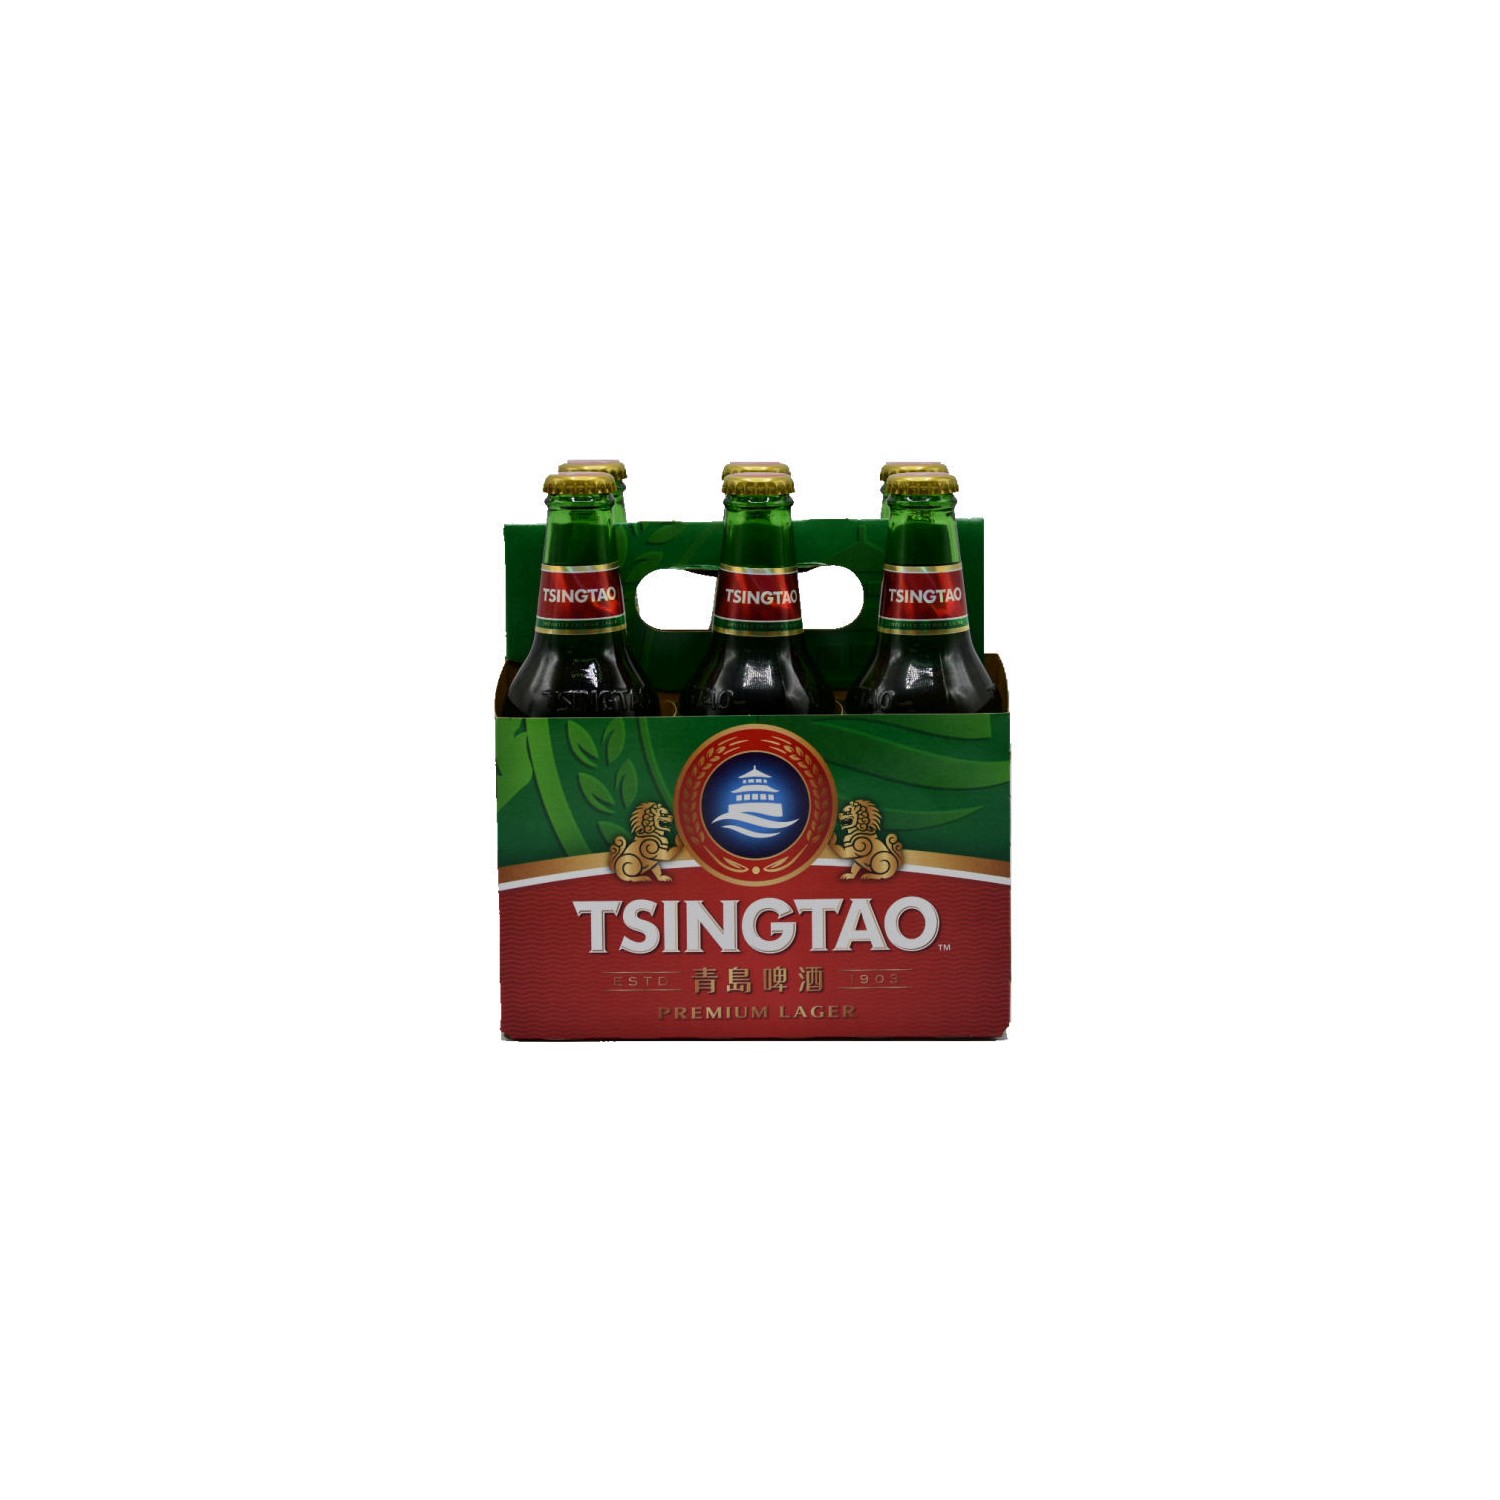 Tsingtao - Pack of 6 - Premium Larger